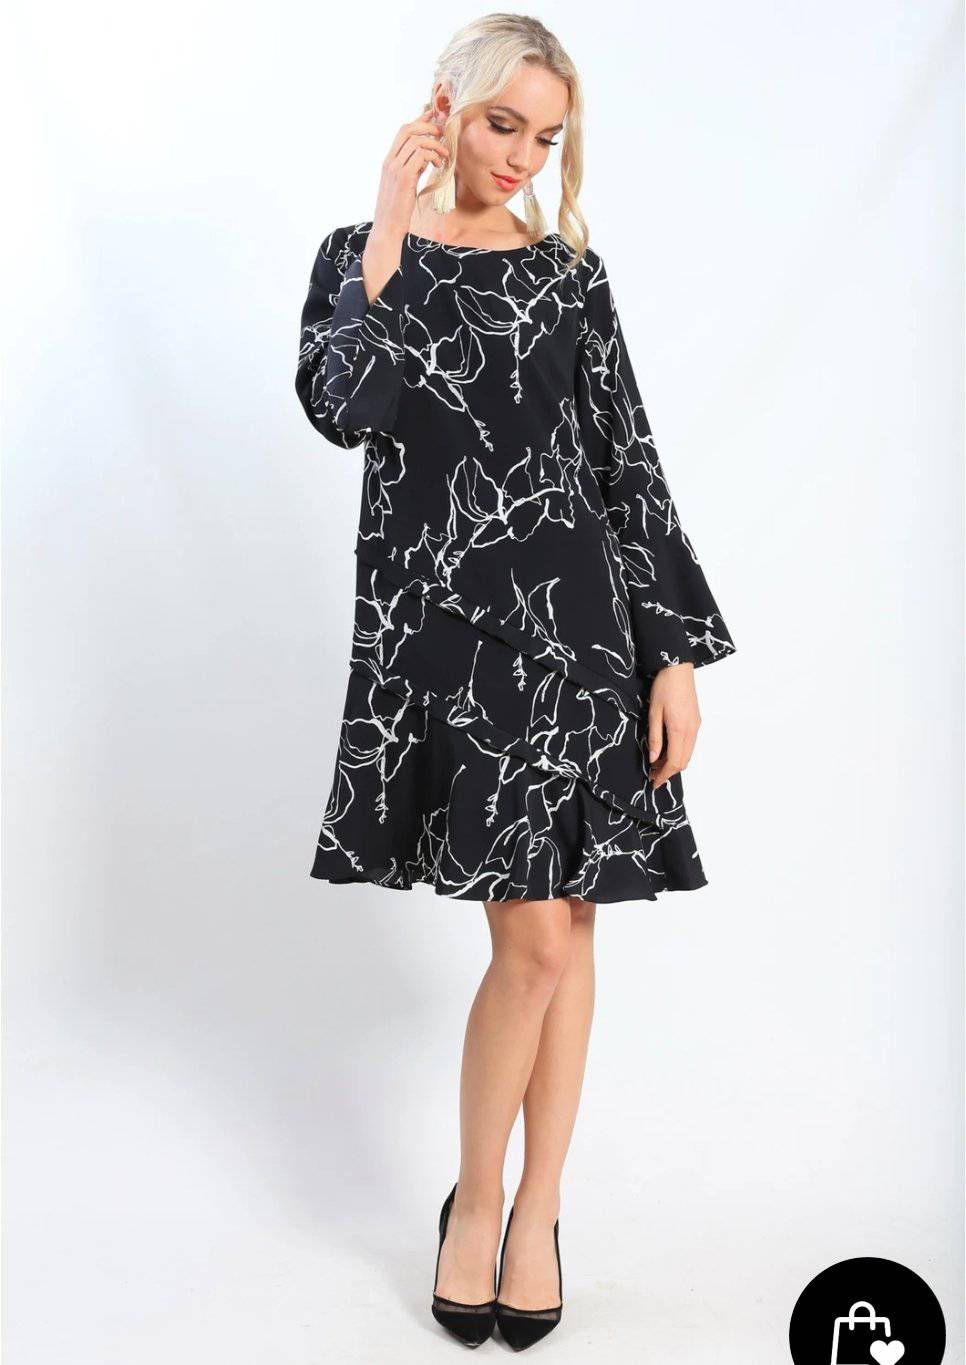 Dress Black White Winter Floral 3/4 Sleeve Knee Length Formal Wear - Tracey Glynn Fashions